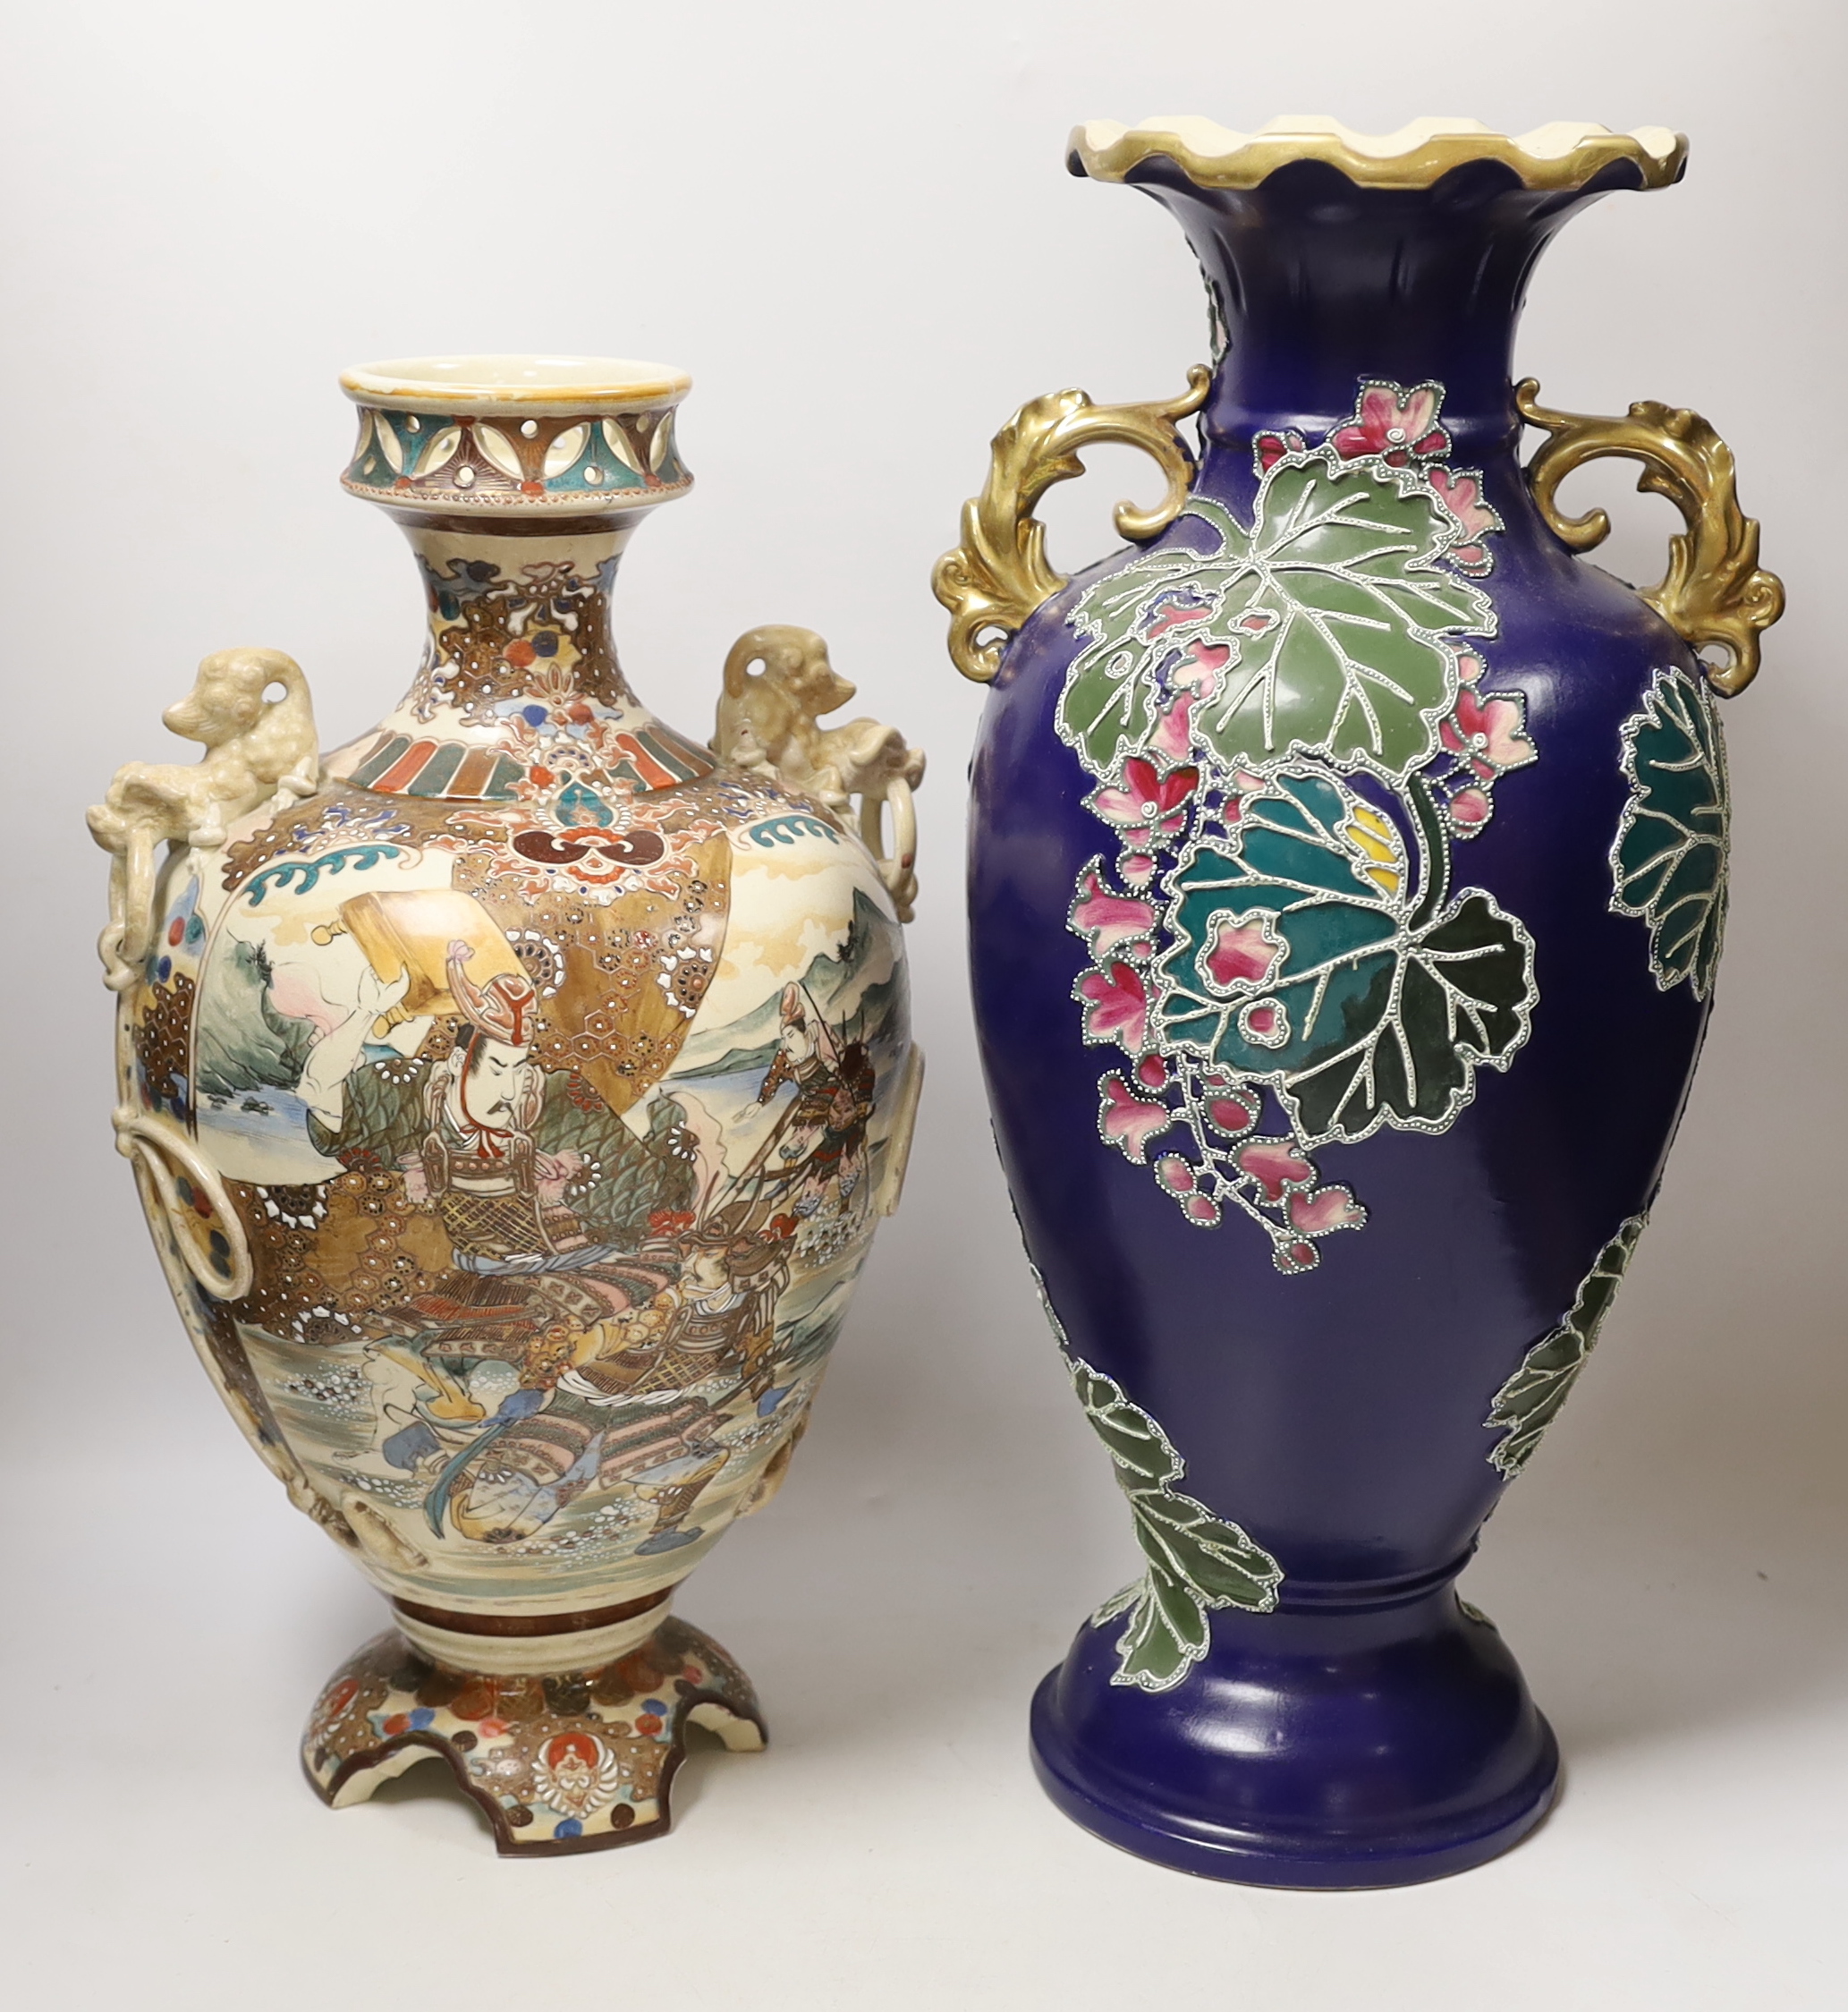 Two large Satsuma pottery vases, tallest 47cm